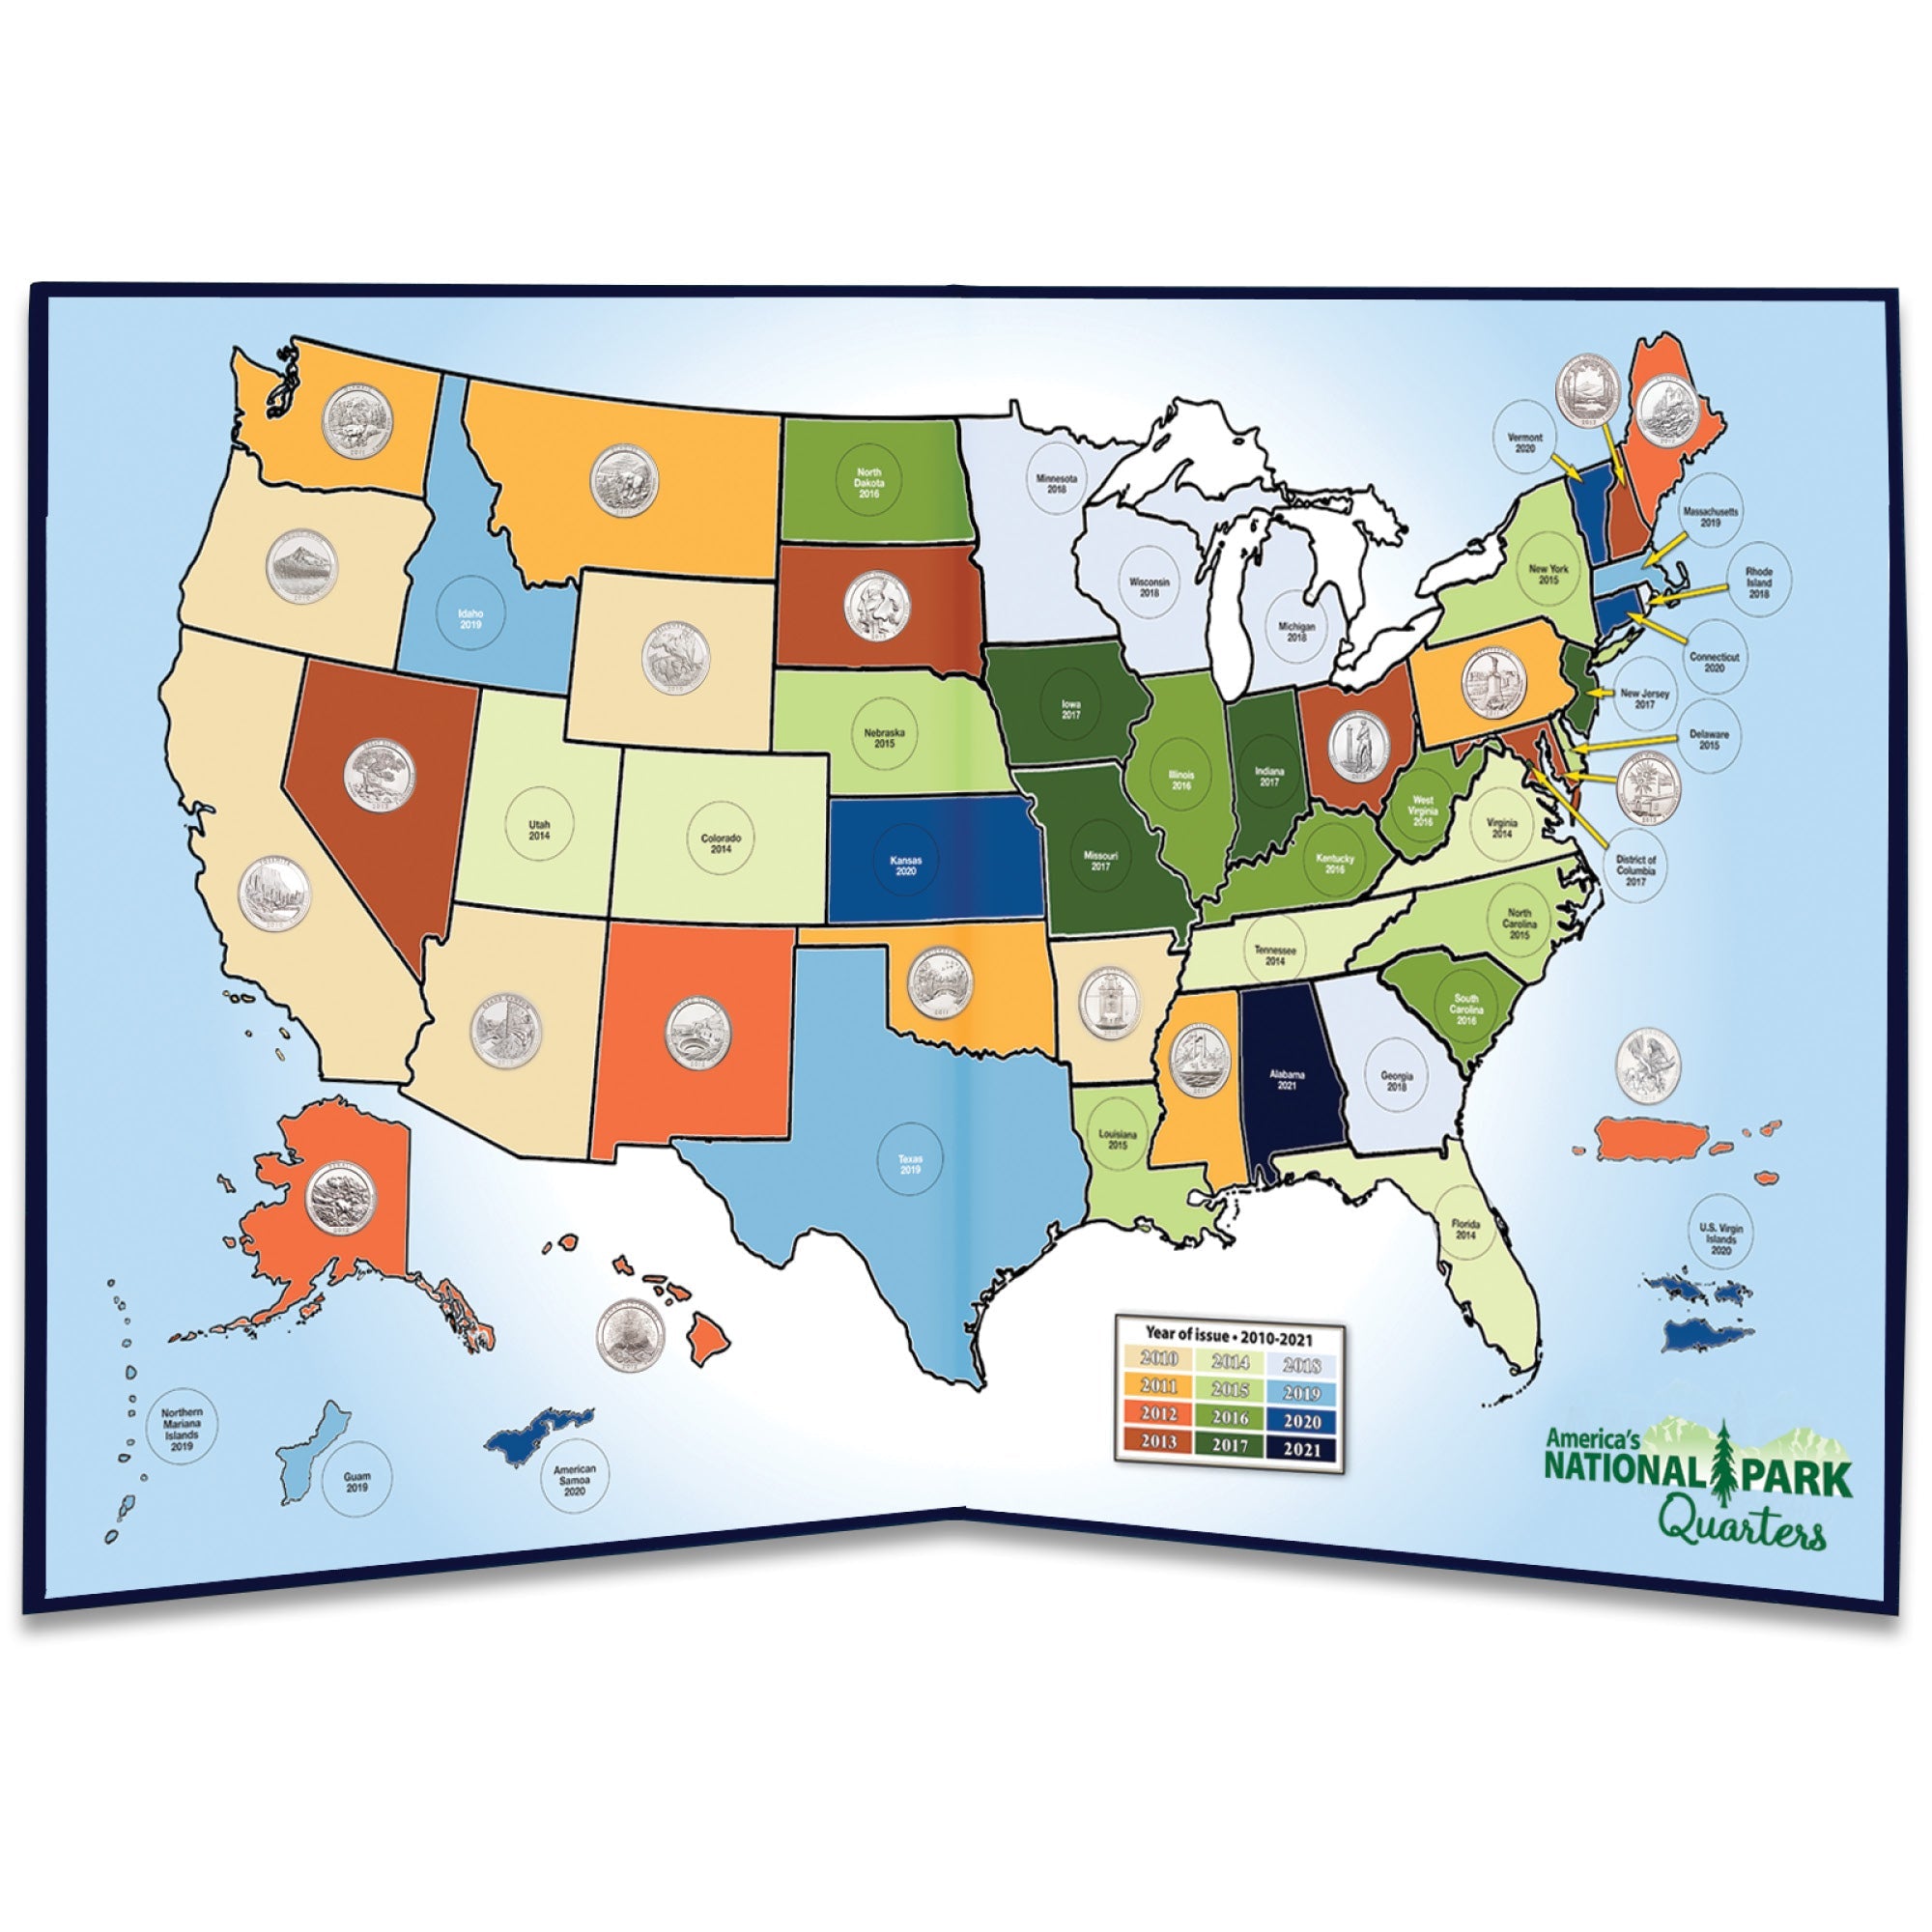 2010-2021 America's National Park Quarter Series Colorful Map Folder